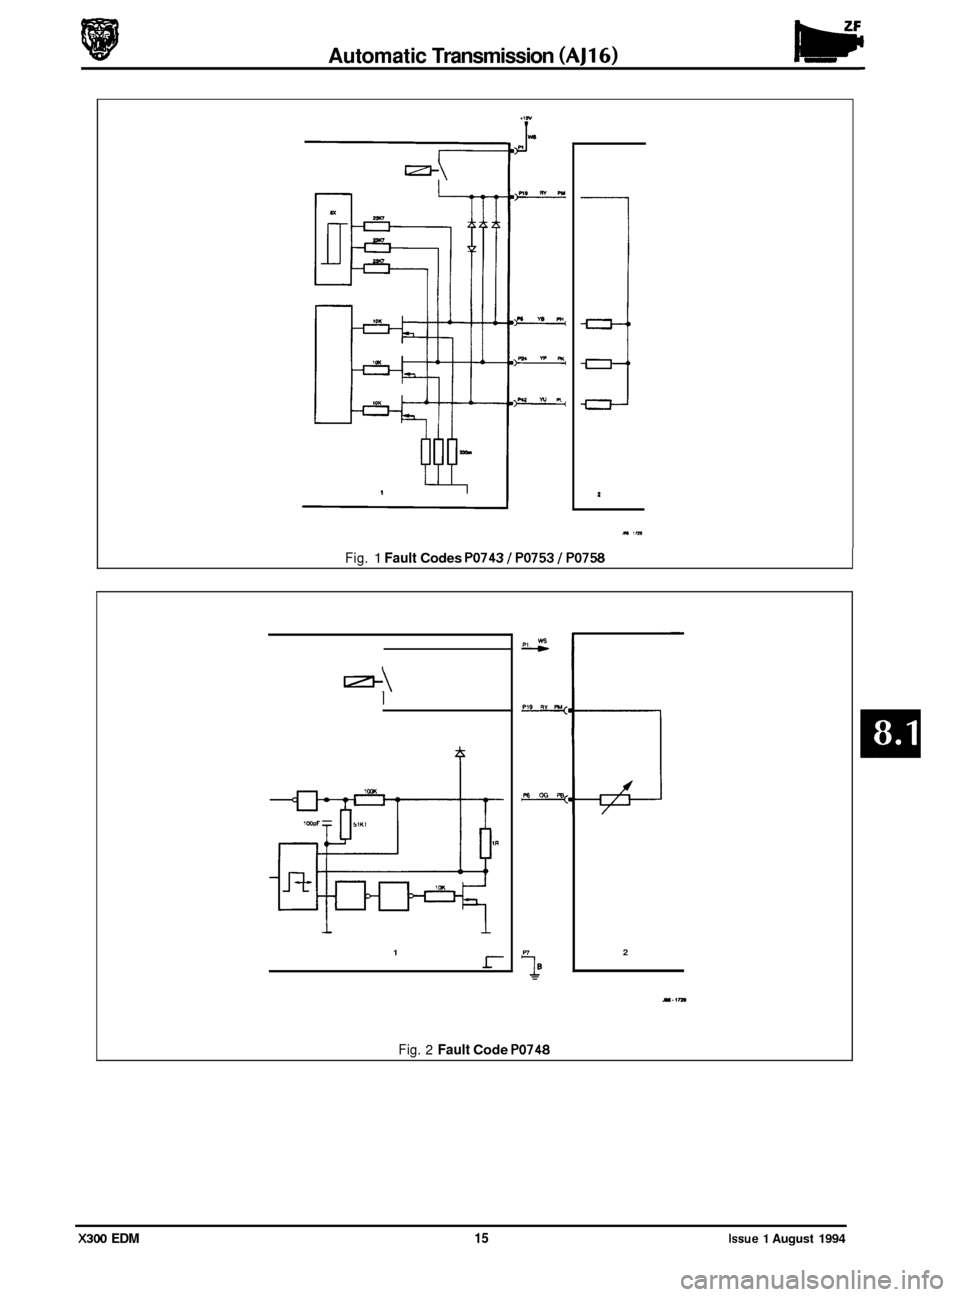 JAGUAR XJ6 1994 2.G Electrical Diagnostic Manual Automatic Transmission (AJ16) w 
mnm 
PnW% 
wa Wn 
1D Int 
Fig. 1 Fault Codes PO743 I PO753 I PO758 
171- I 
1 1 
1 L- 2 
Fig. 2 Fault Code PO748 
X300 EDM 15 Issue 1 August 1994  